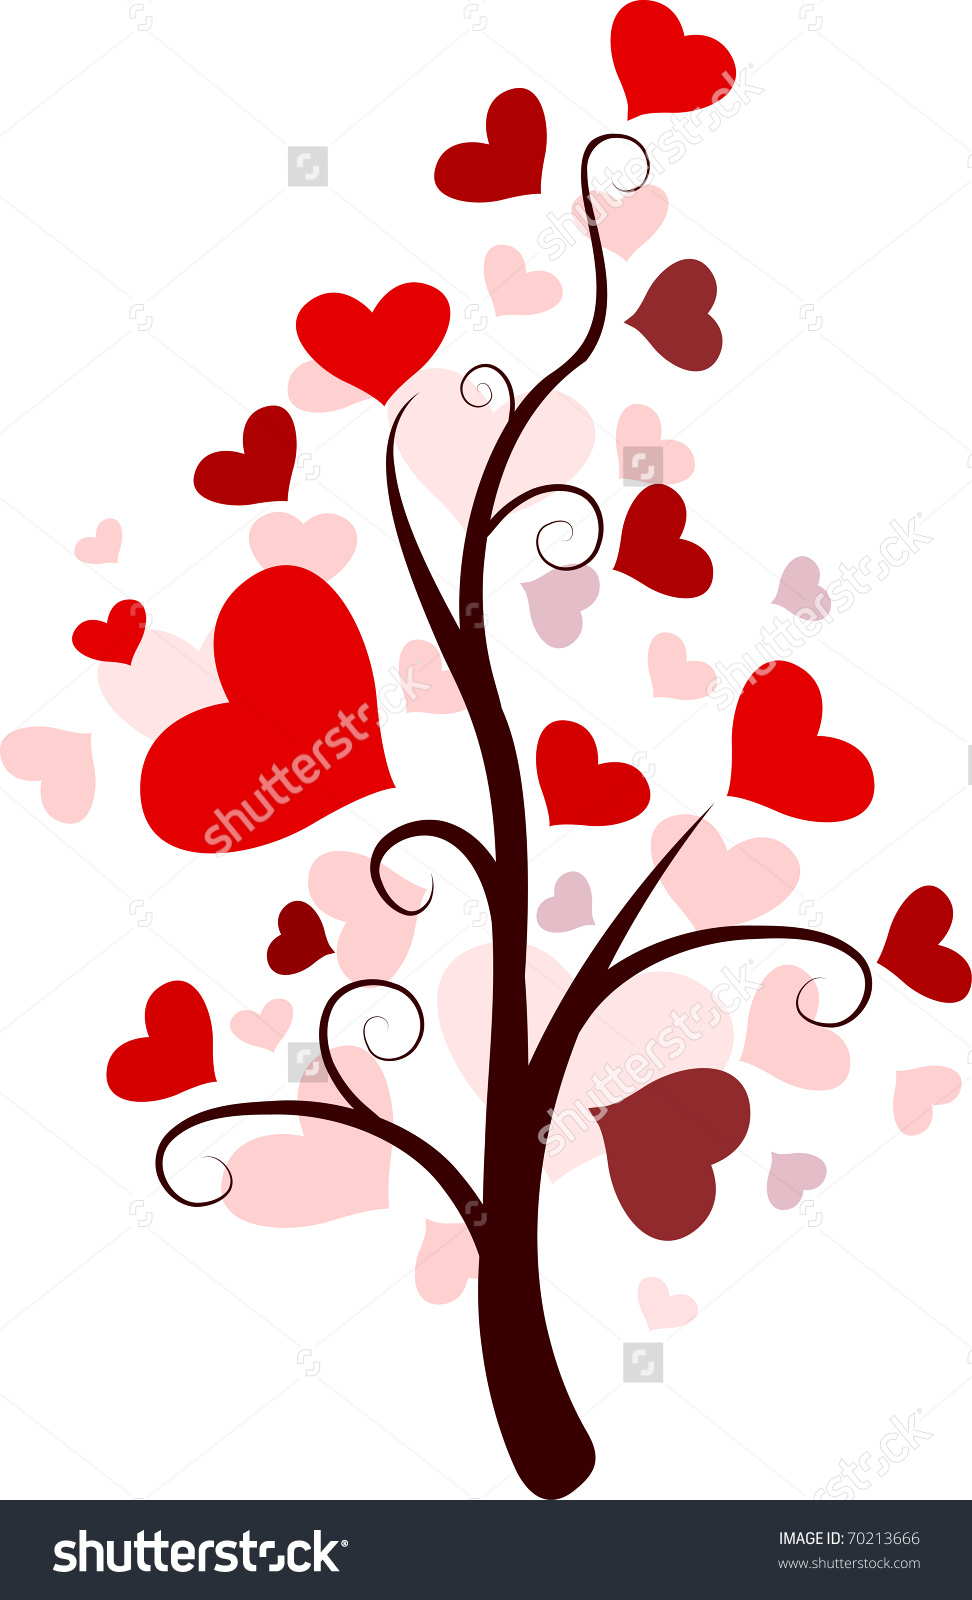 Illustration Random Tree Heartshaped Leaves Stock Vector 70213666.